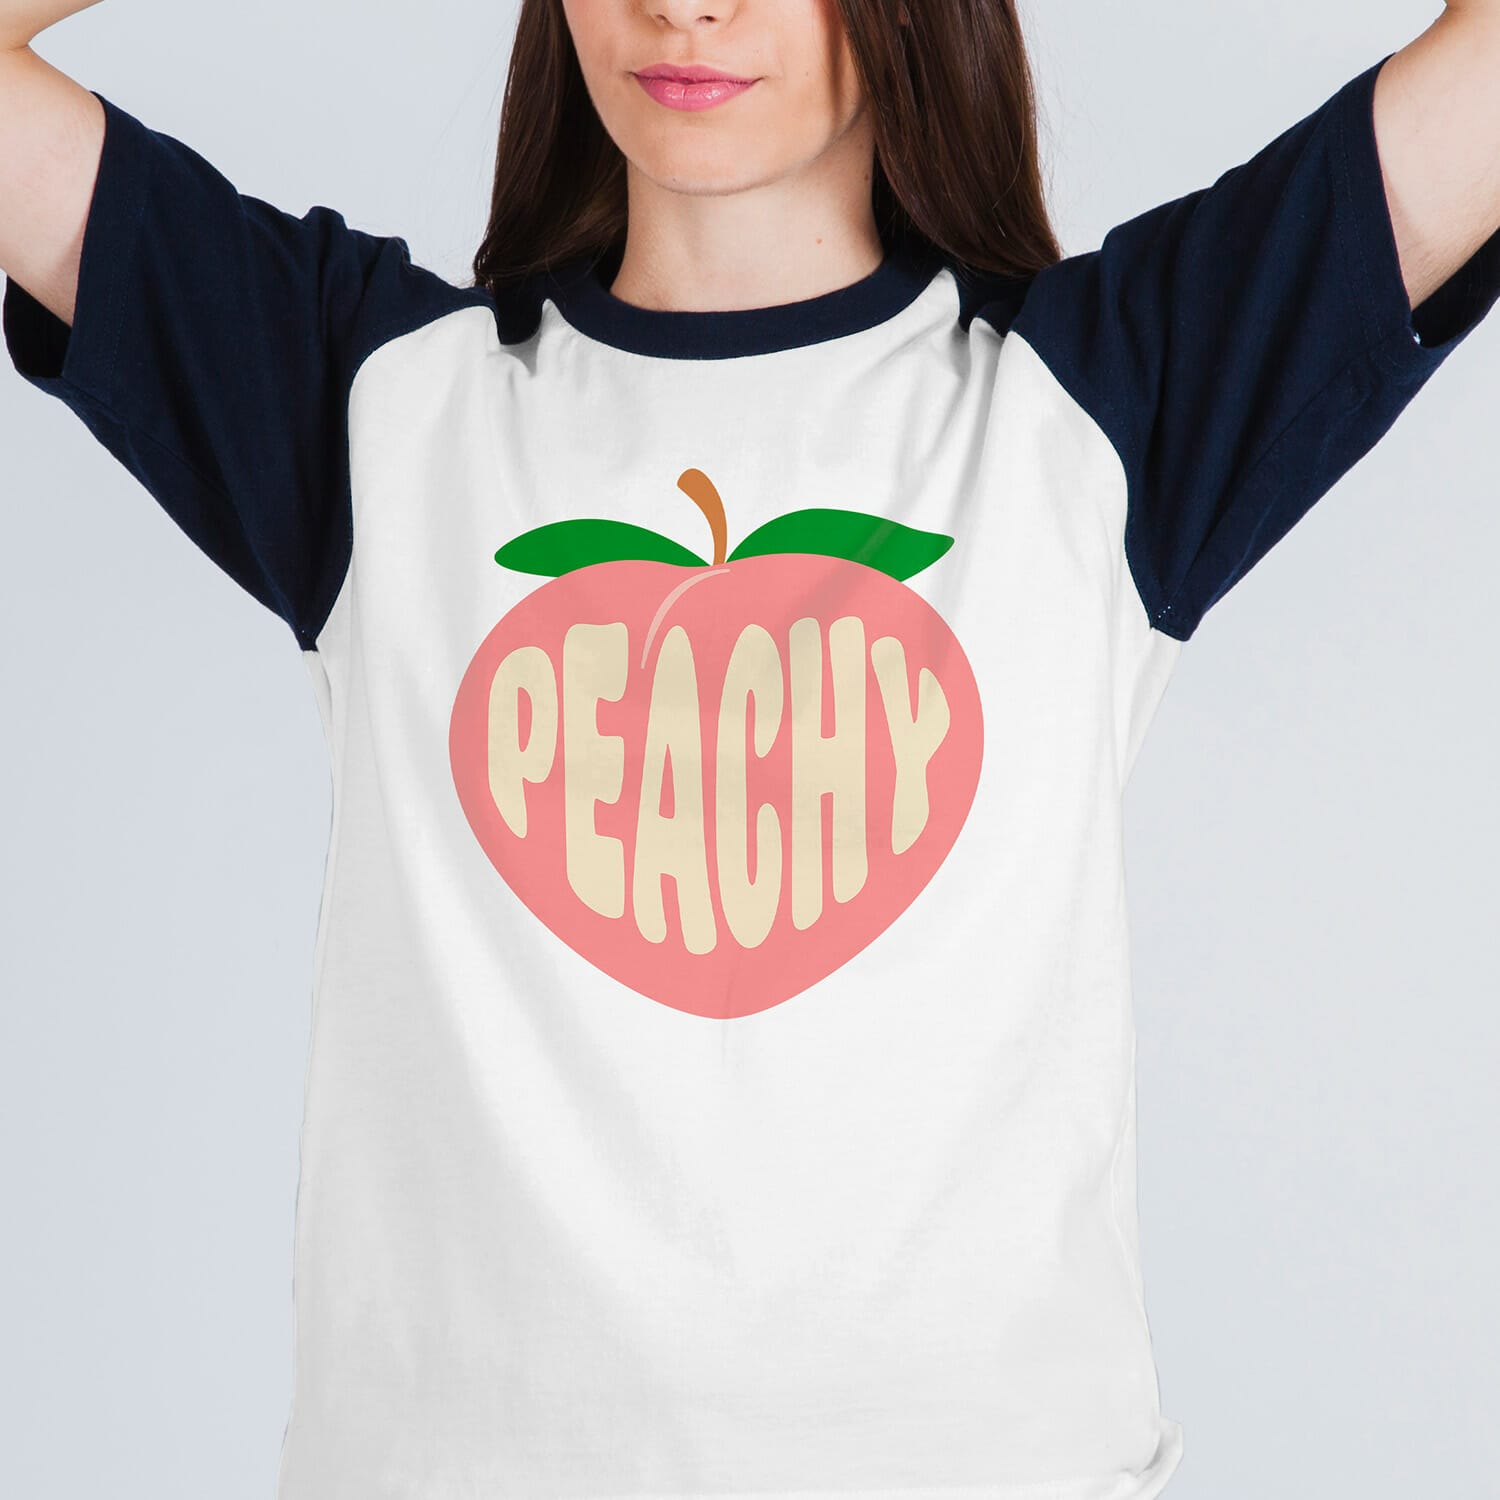 Peachy tshirt design For Girls